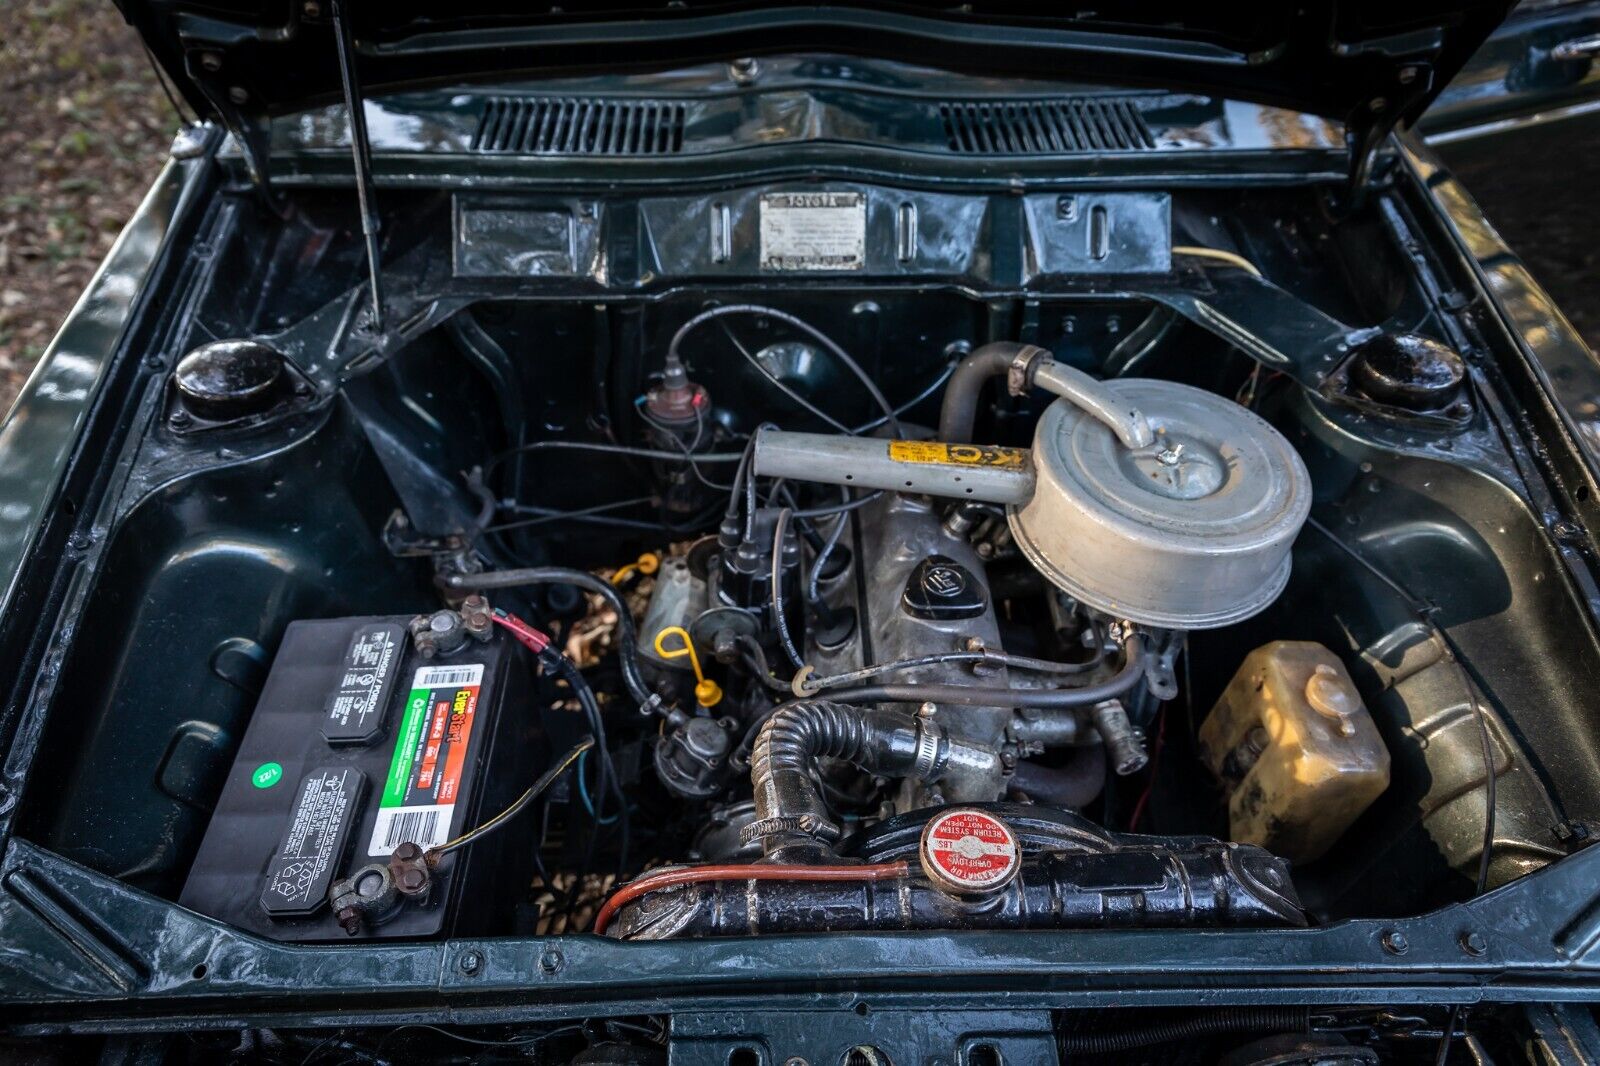 1969 Toyota Corolla - 1.1-liter four-cylinder engine